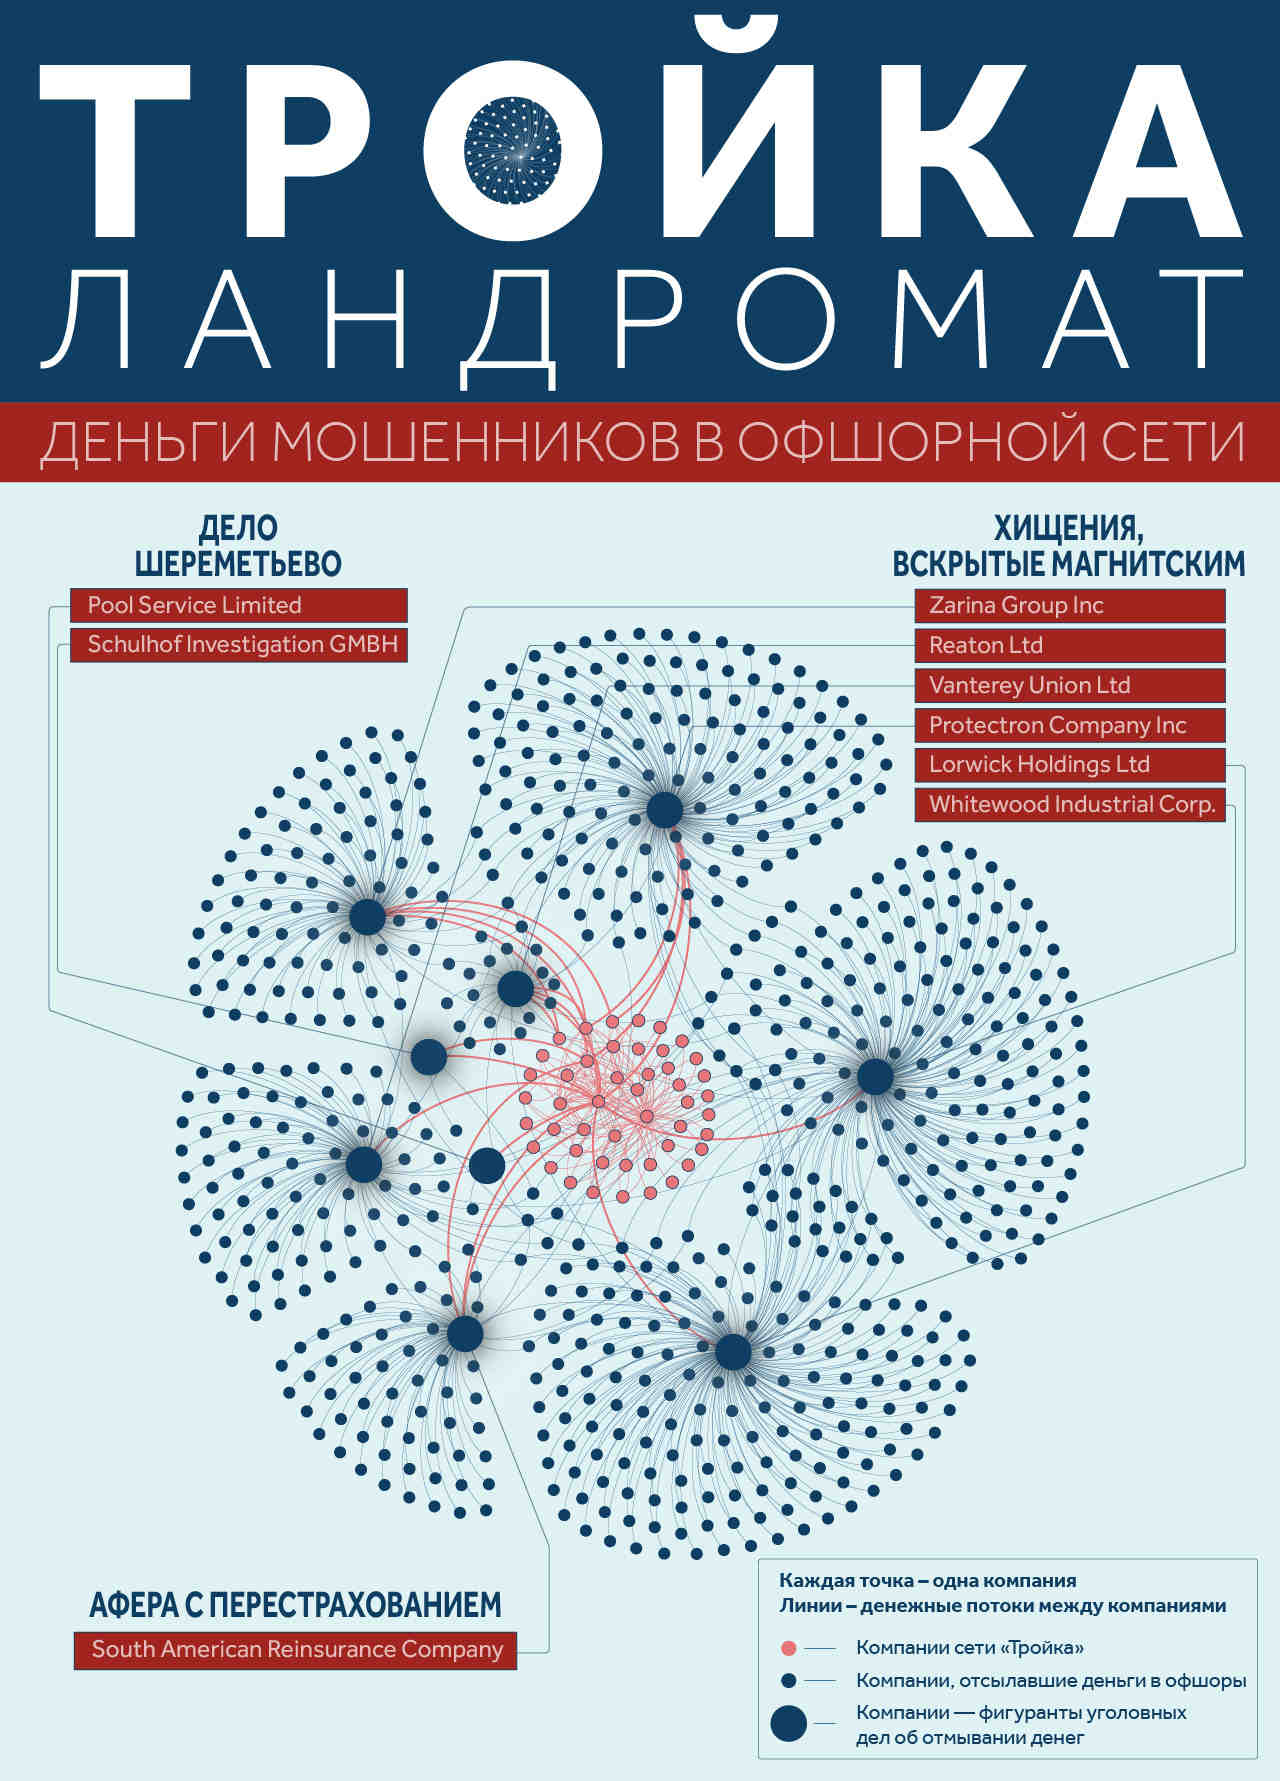 troikalaundromat/Infographic1_ru.jpg